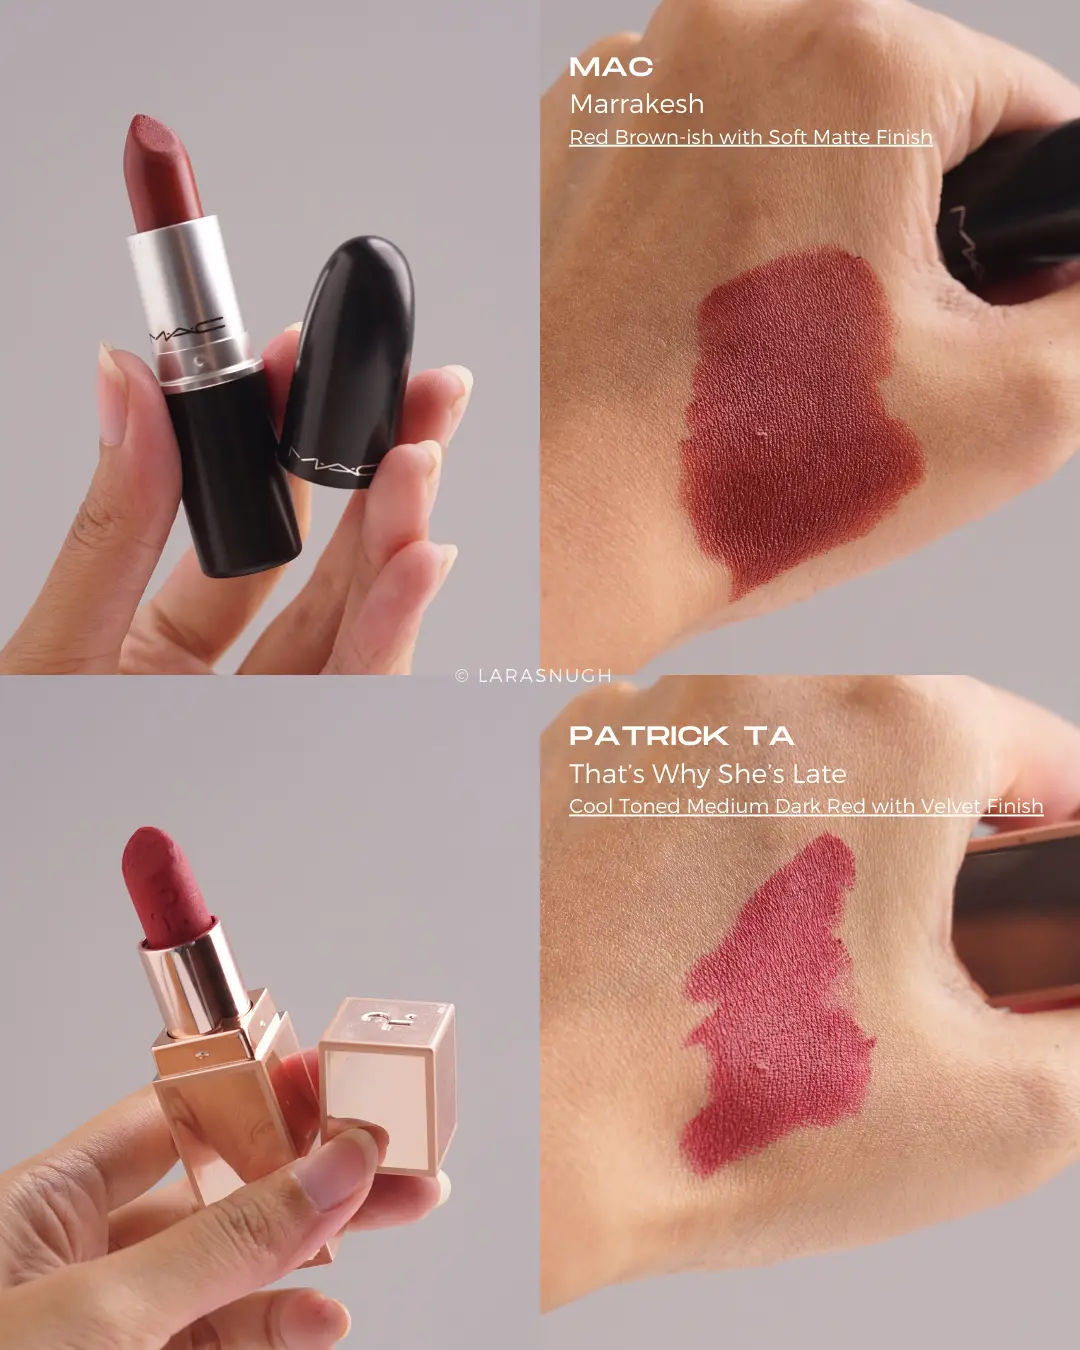 Best Red Matte Lipstick Review: Chanel Vs Mac, Glossier, Revlon